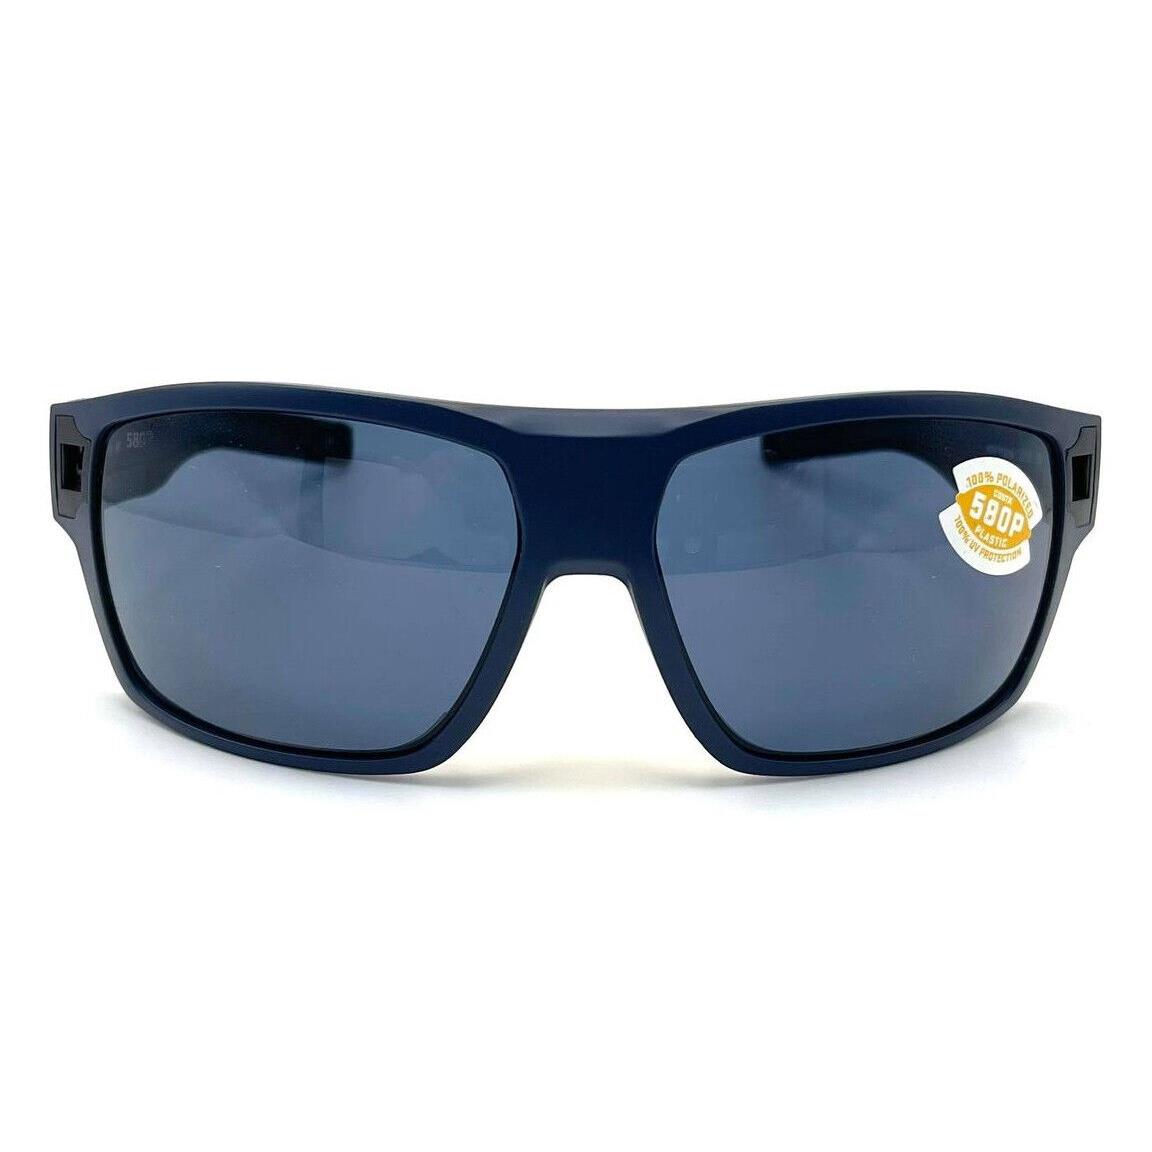 Costa Del Mar Diego Sunglasses Matte Midnight Blue/gray 580Plastic - Frame: Matte Midnight Blue, Lens: Gray 580Plastic